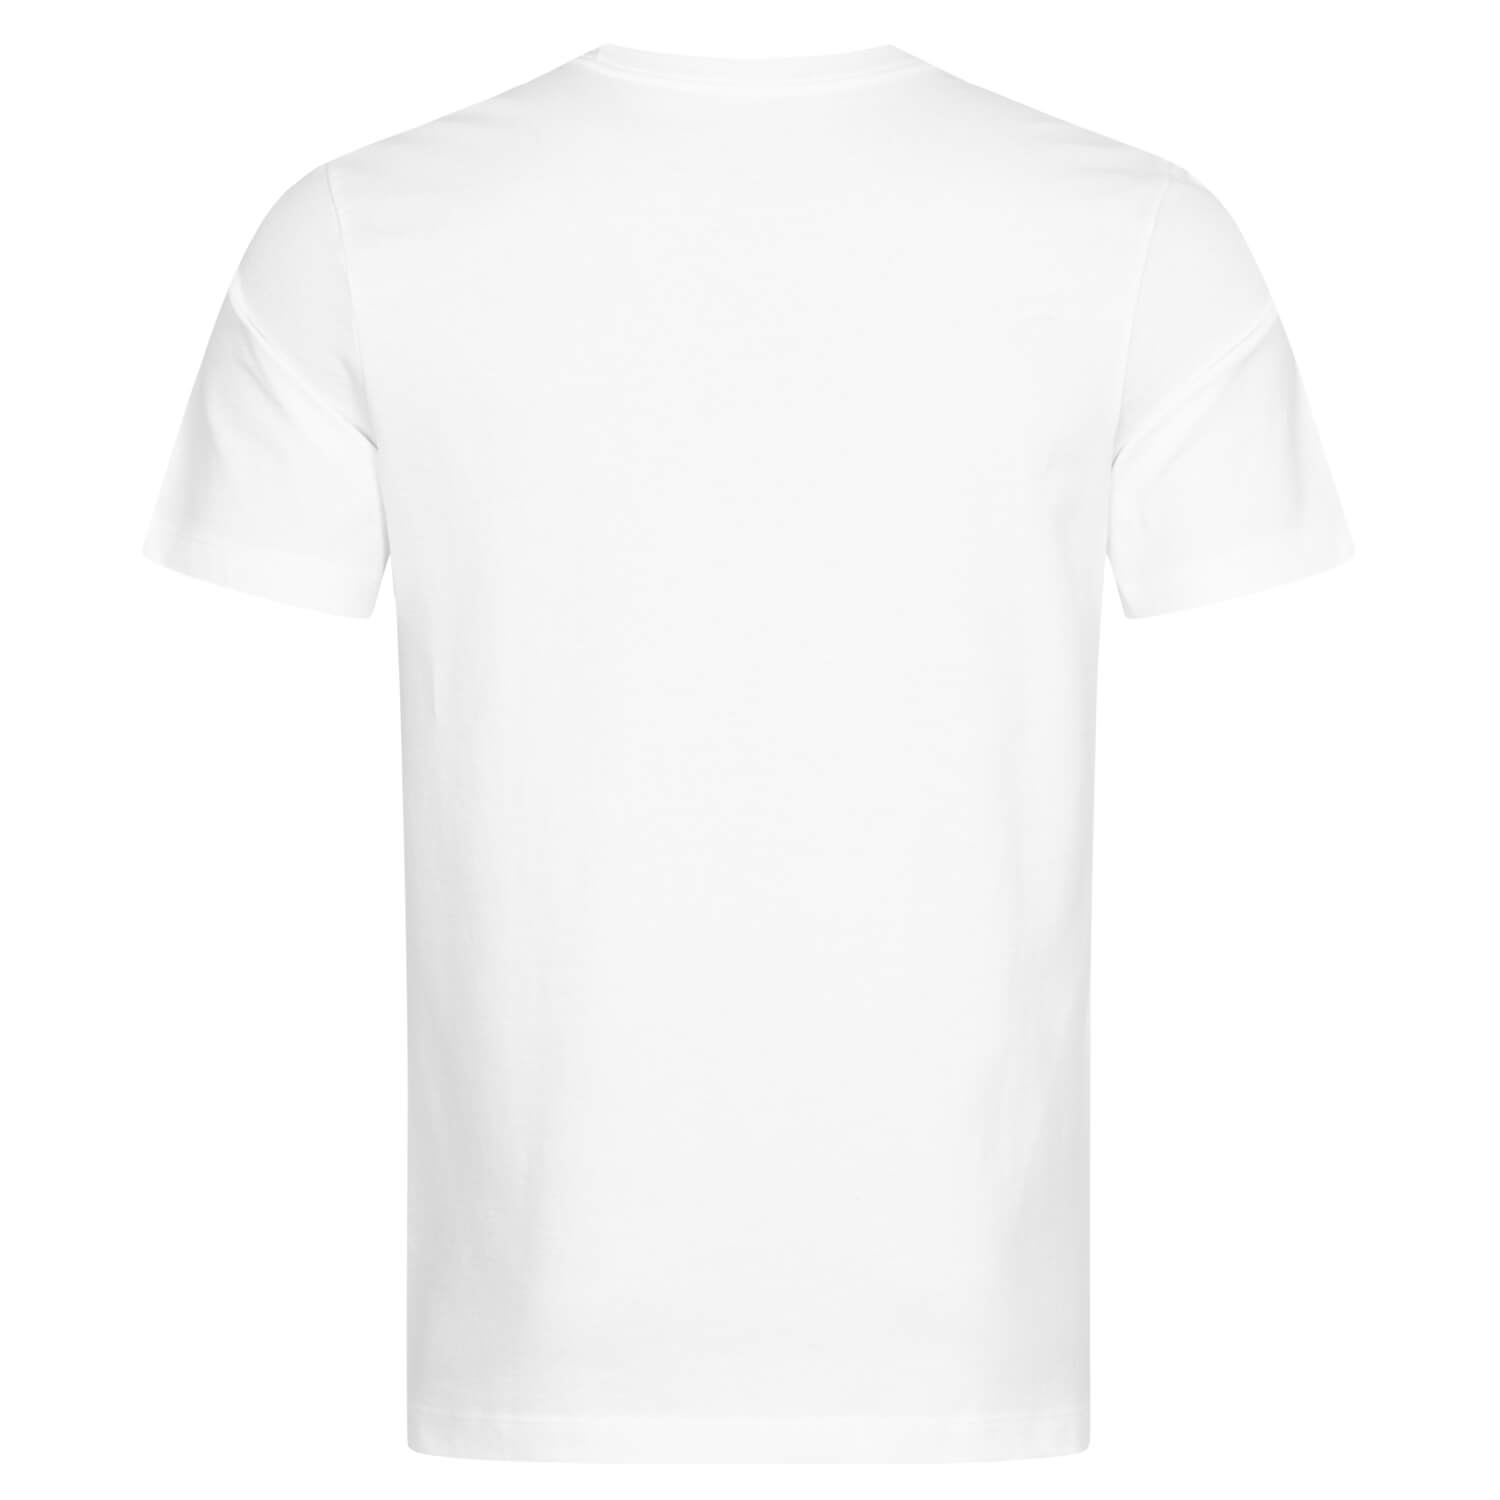 Bild 2: Nike T-Shirt 23 Weiß